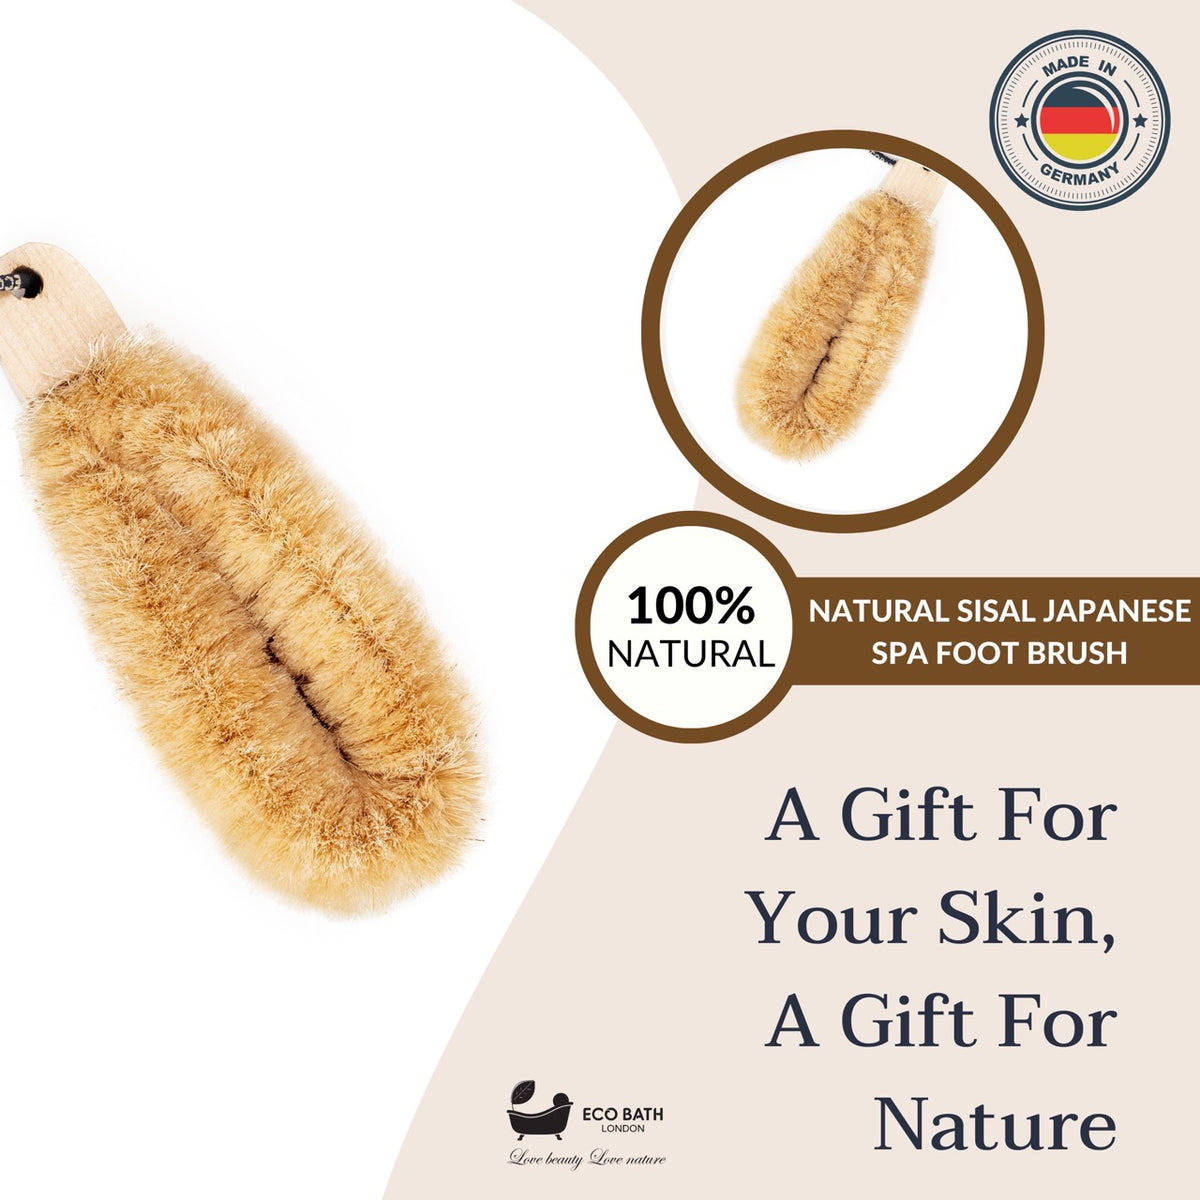 Natural Sisal Japanese Spa Foot Brush